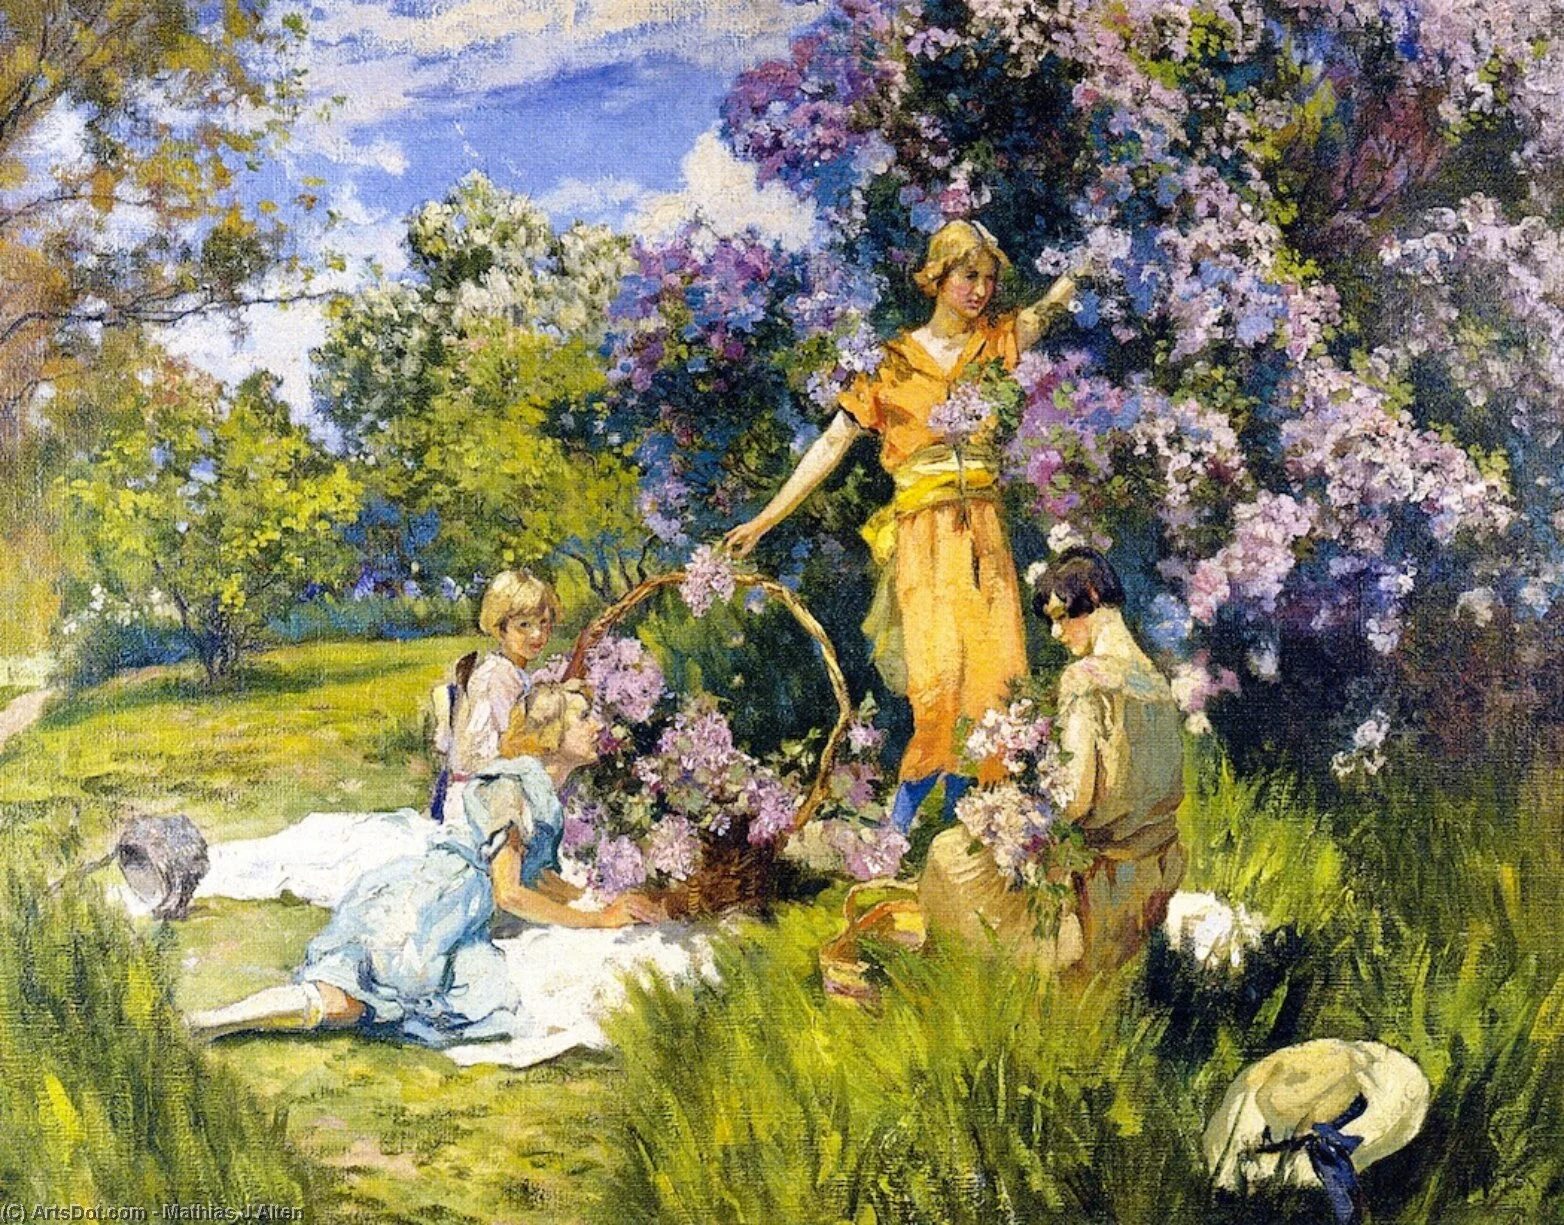 Mathias Joseph alten (American, 1871-1938) Lilacs.. Joseph alten Lilacs картины. Софи Андерсон сирень. Художник Mathias j. alten.